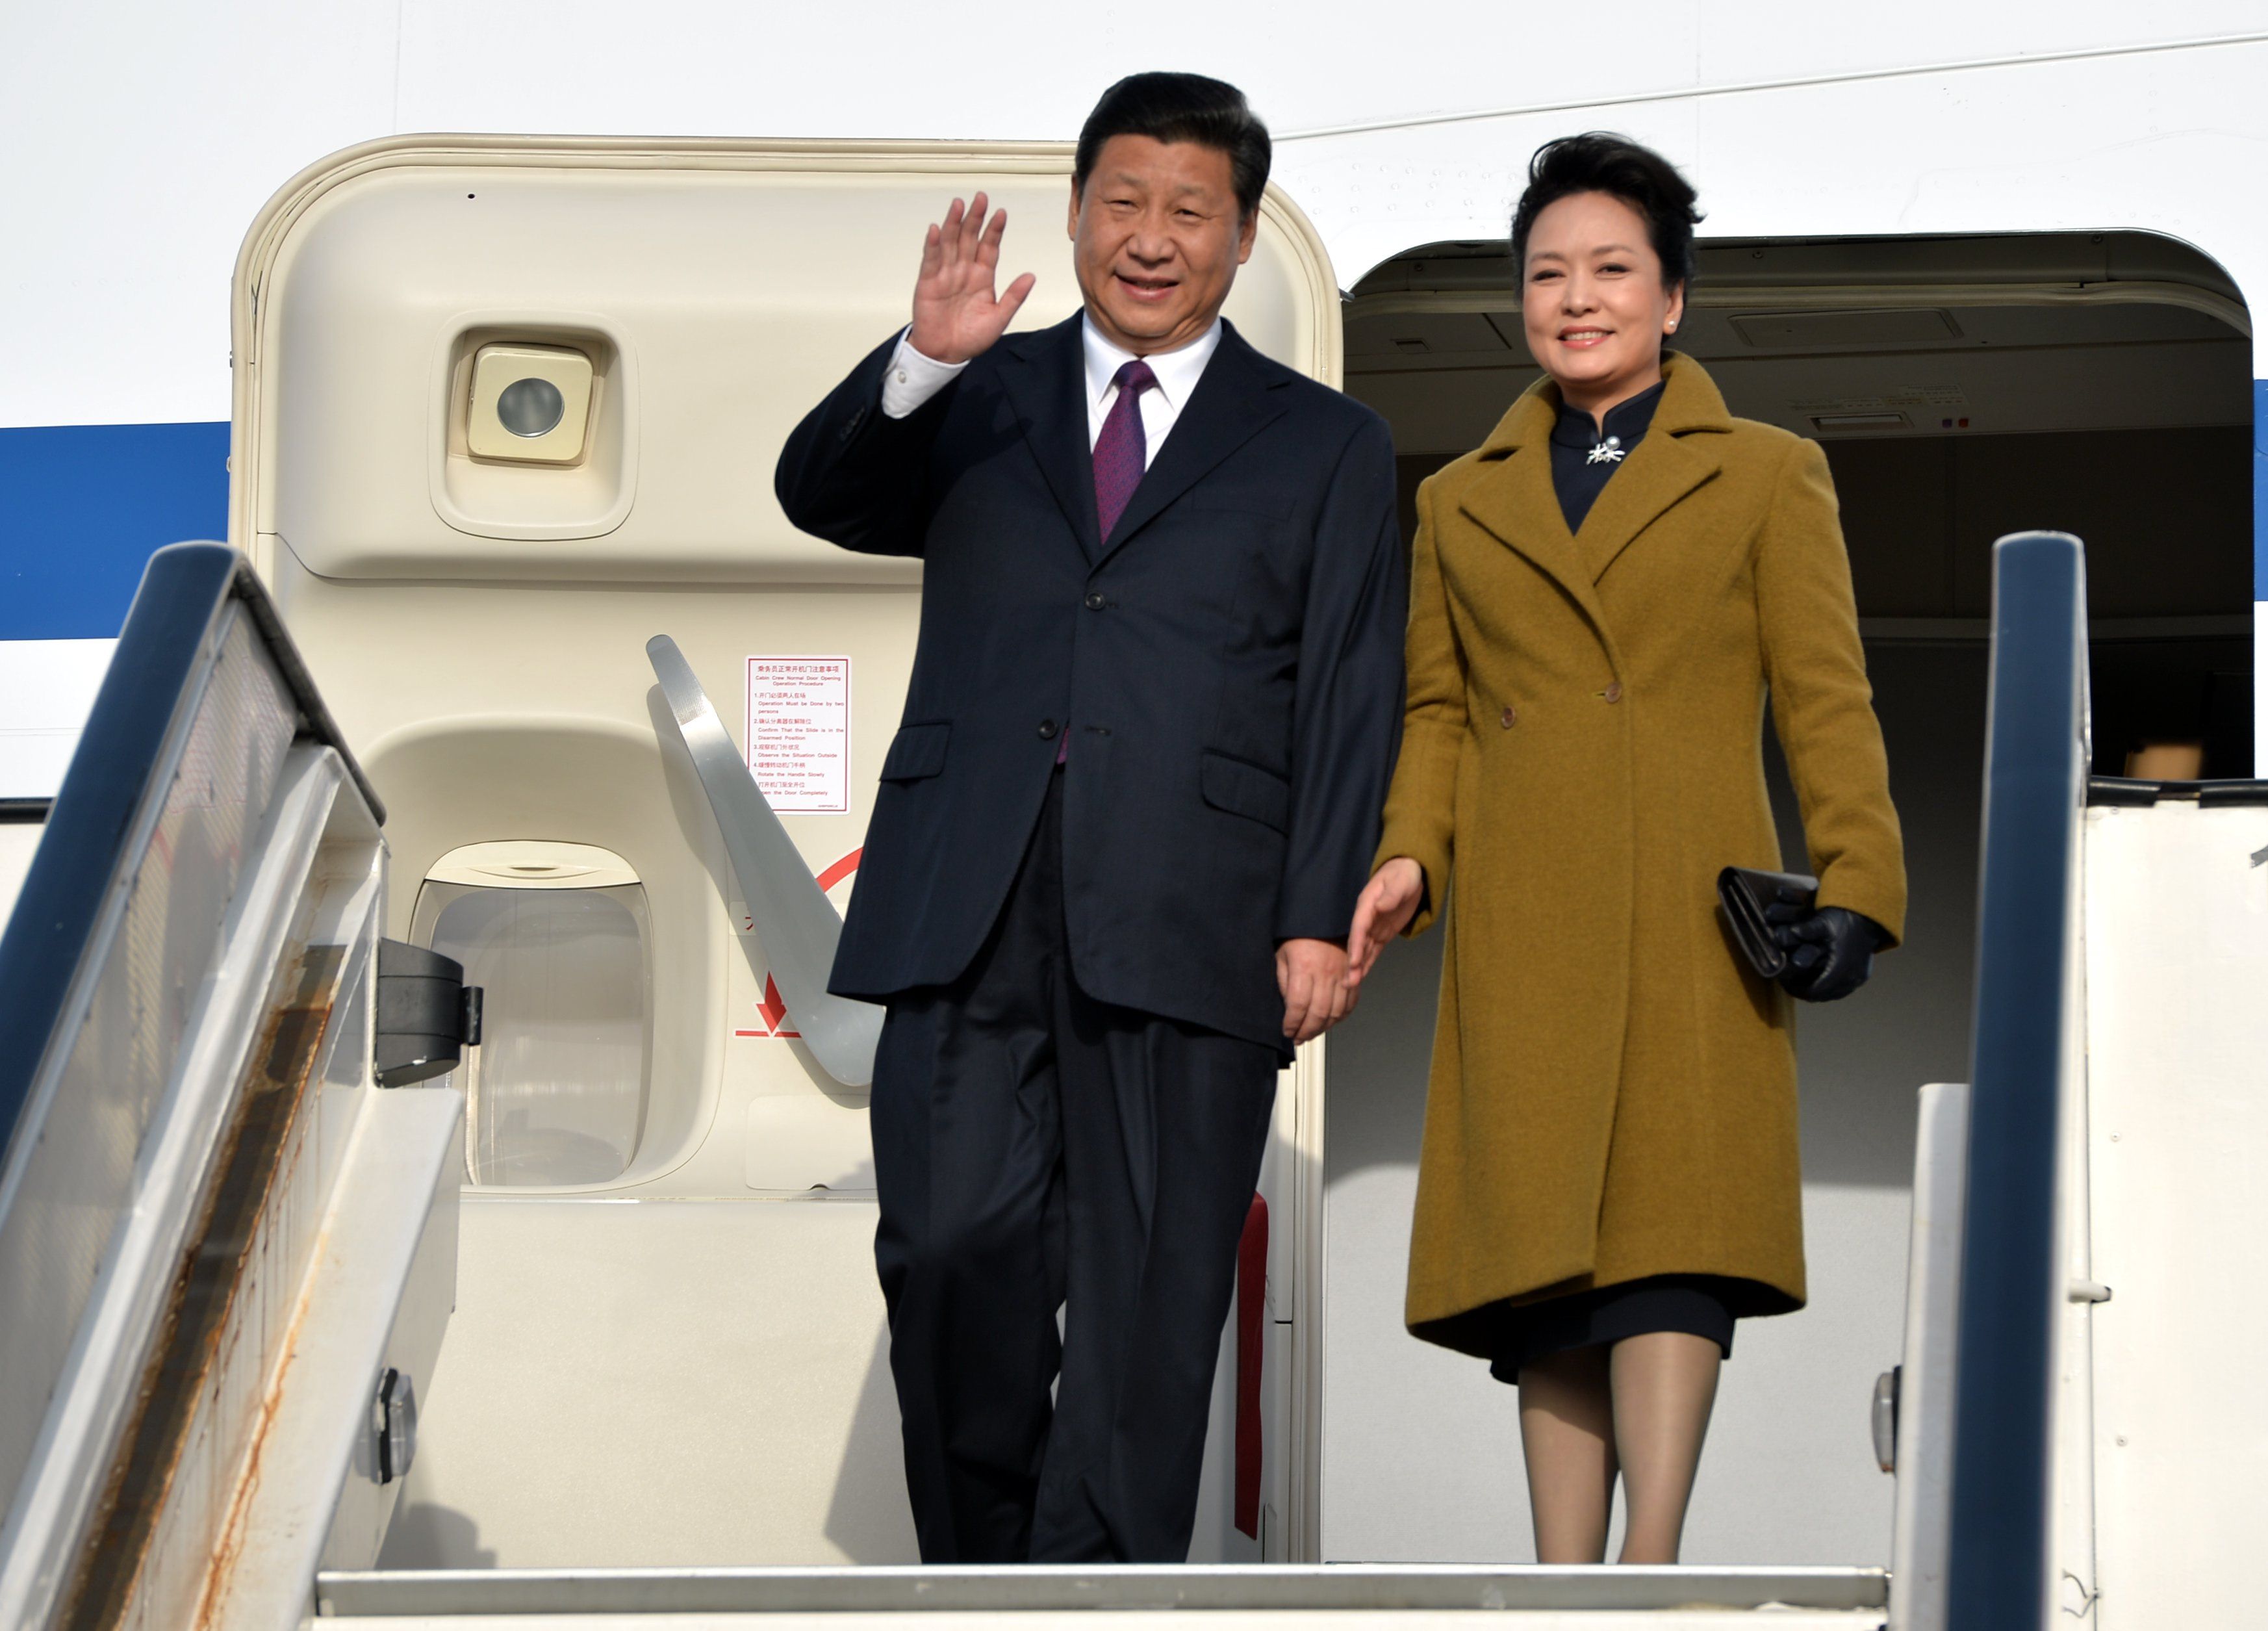 Xi Jinping and wife Peng Liyuan arrive in Zaventem, Belgium. Photo: AFP